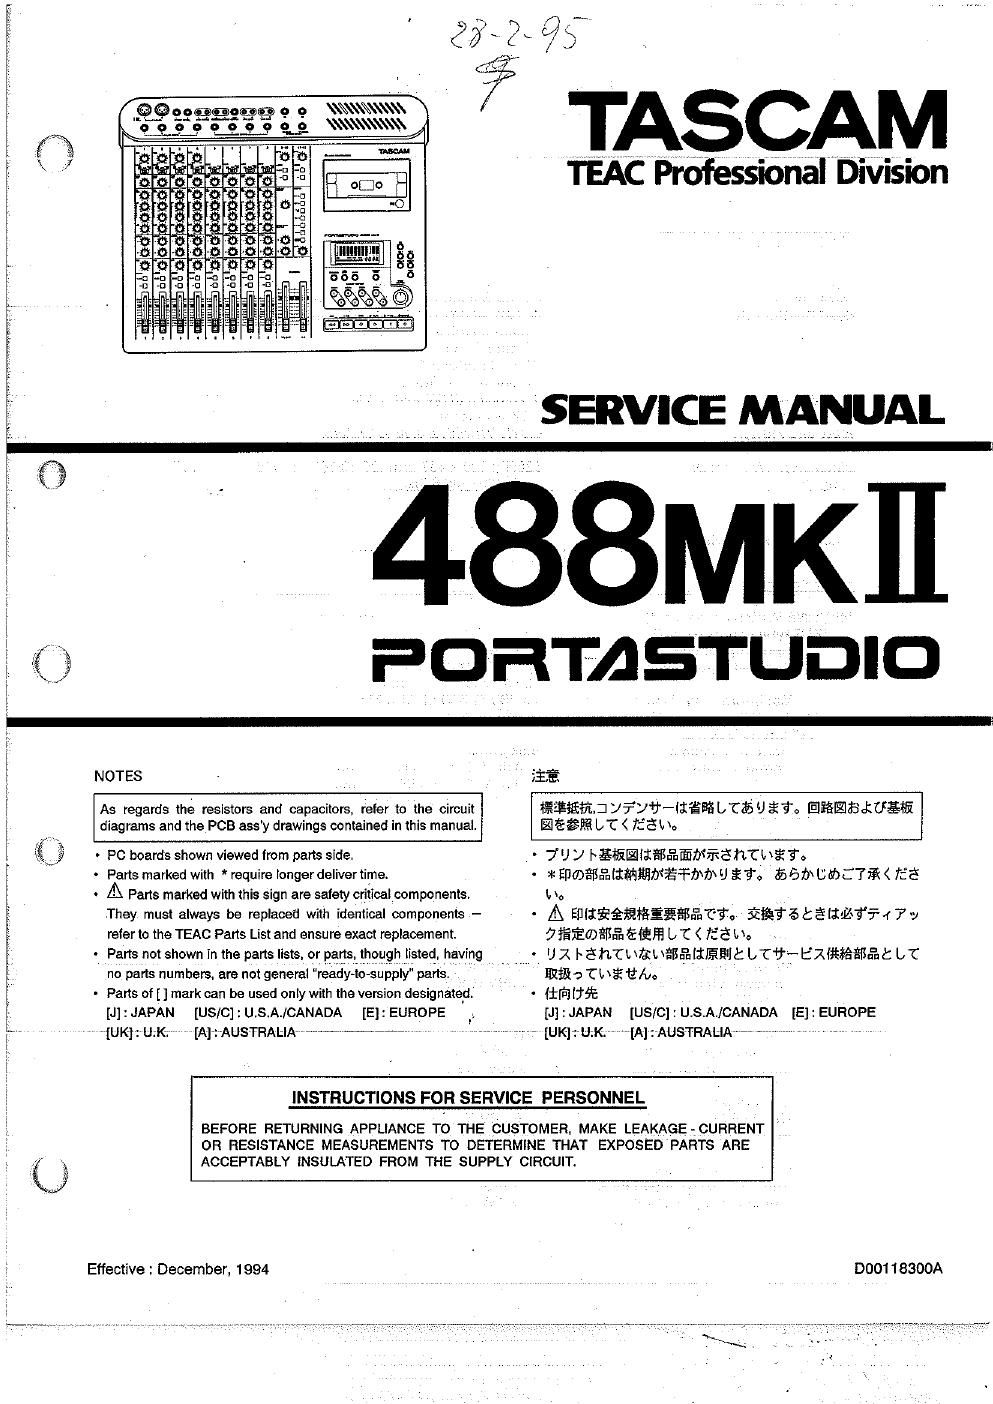 Tascam 488MKII Portastudio Service Manual